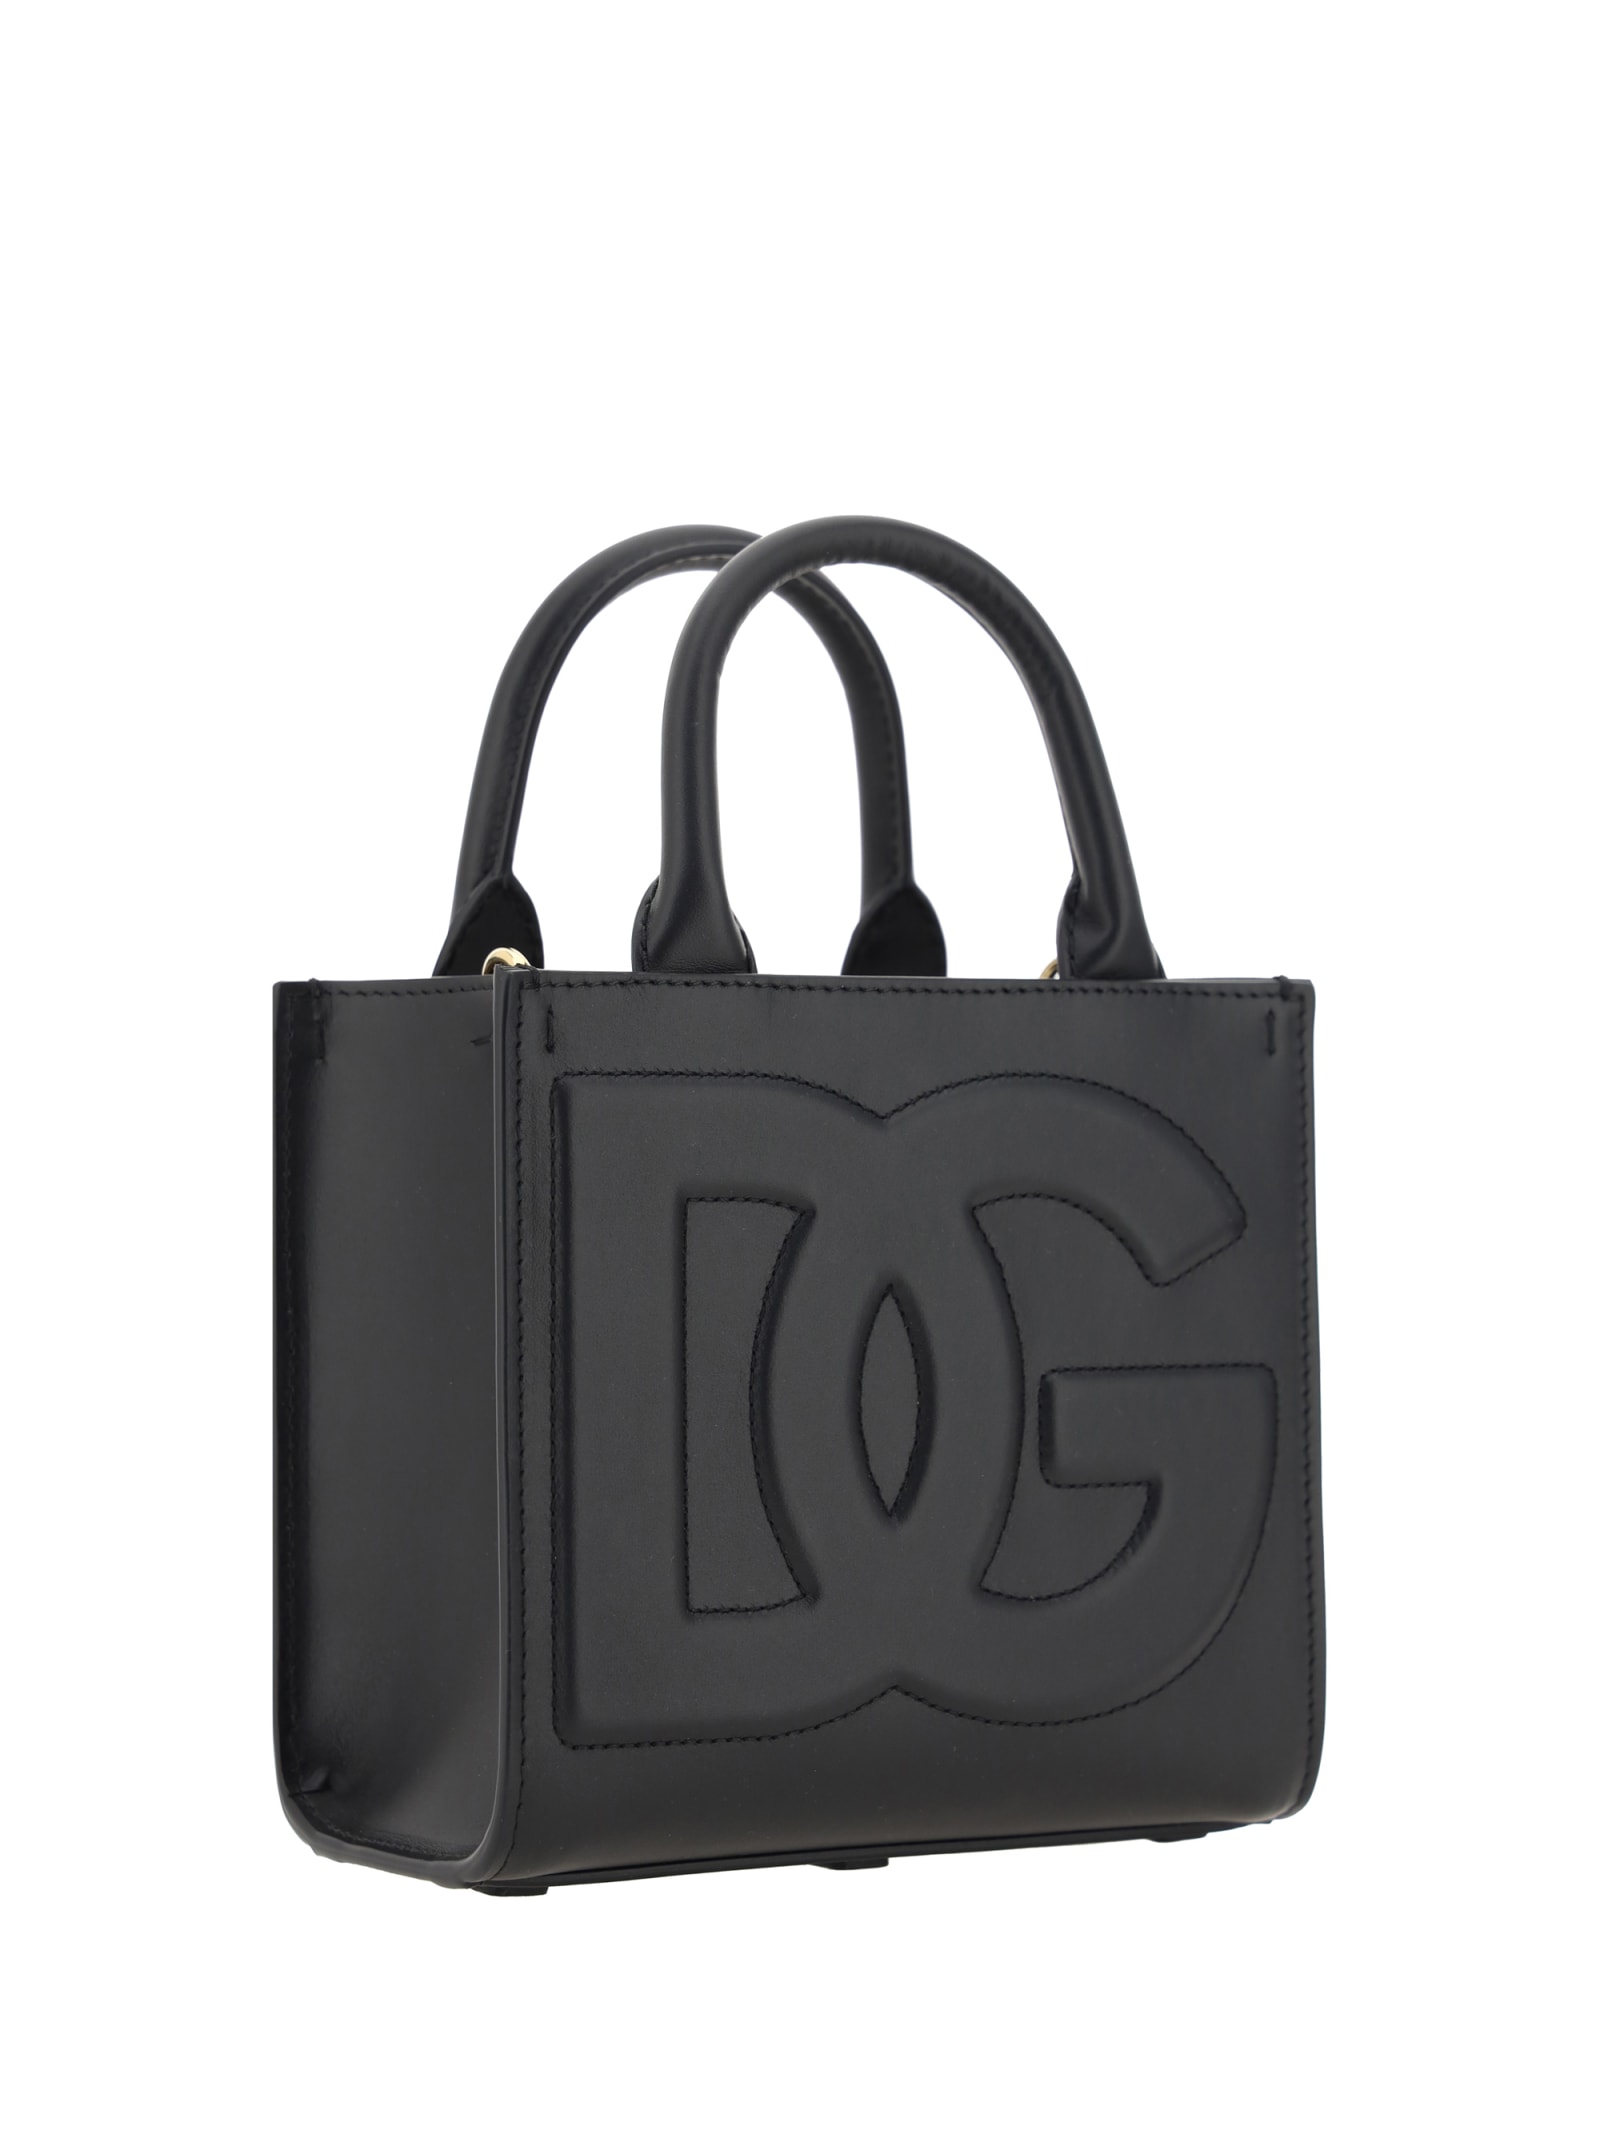 CHANEL Bag Neo Executive Tote Women's Handbag Shoulder Leather Gray